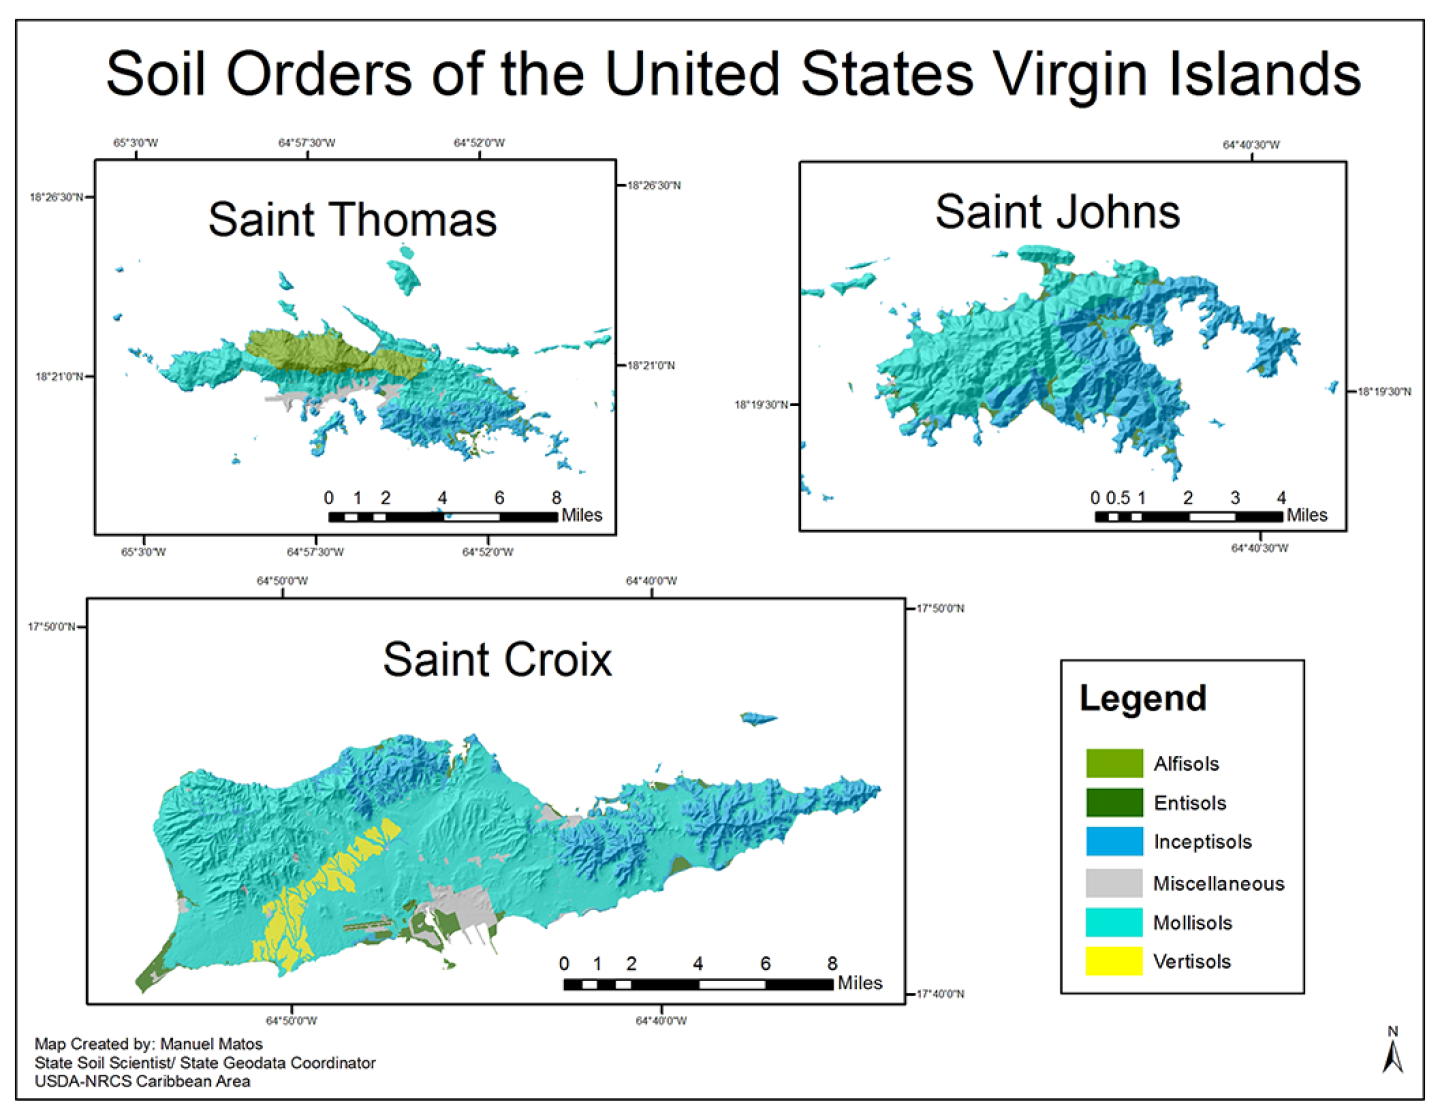 Soil orders of the U.S. Virgin Islands map, June 2018.